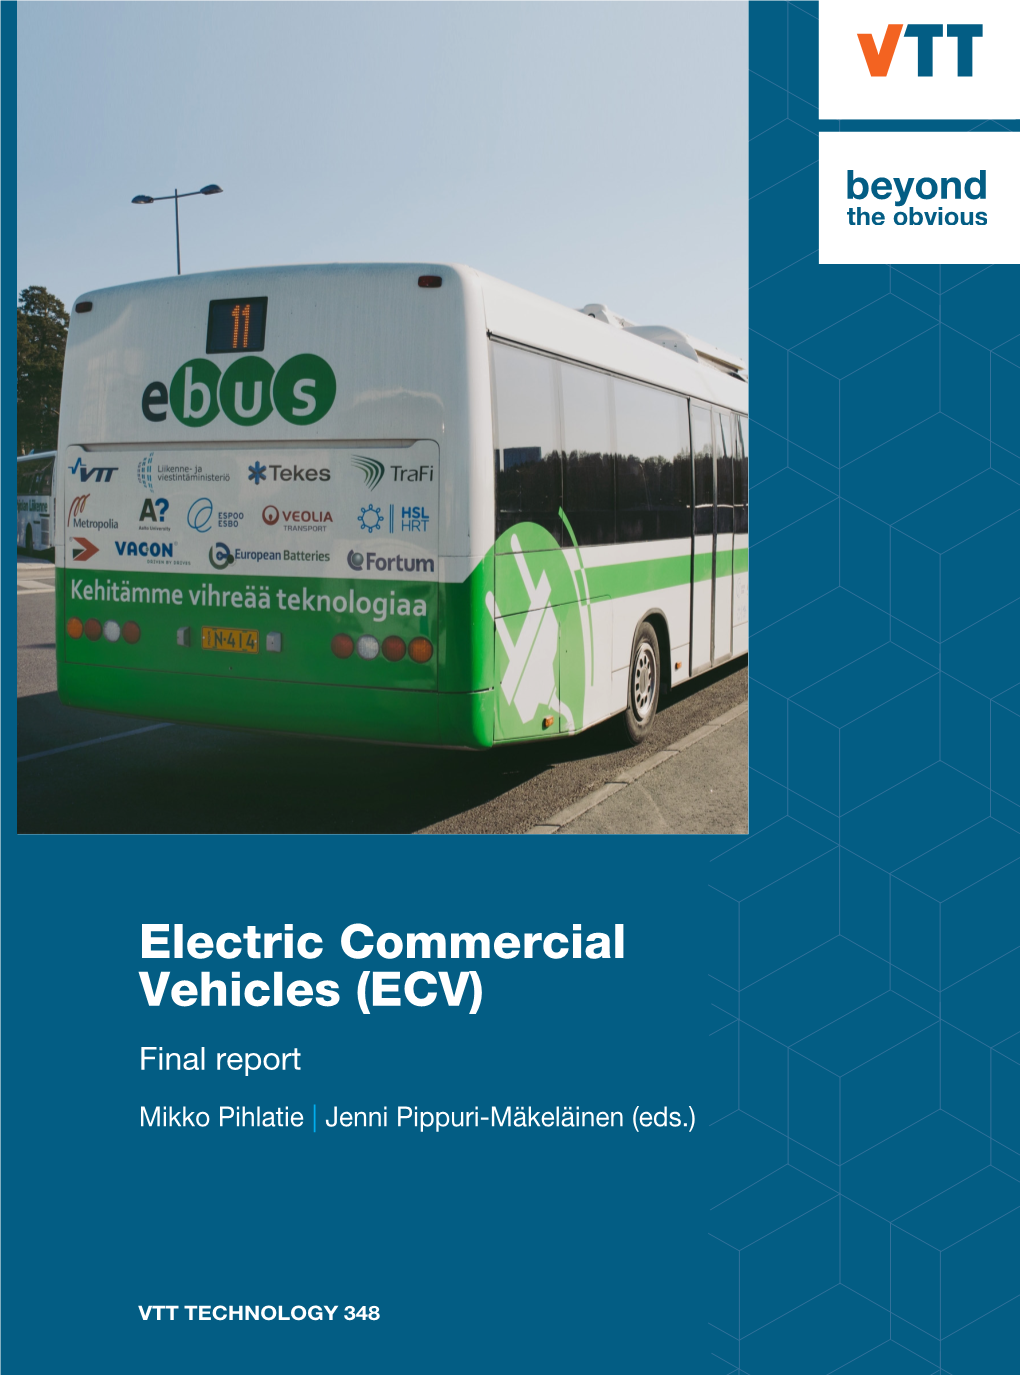 VTT Technology 348: Electric Commercial Vehicles (ECV)